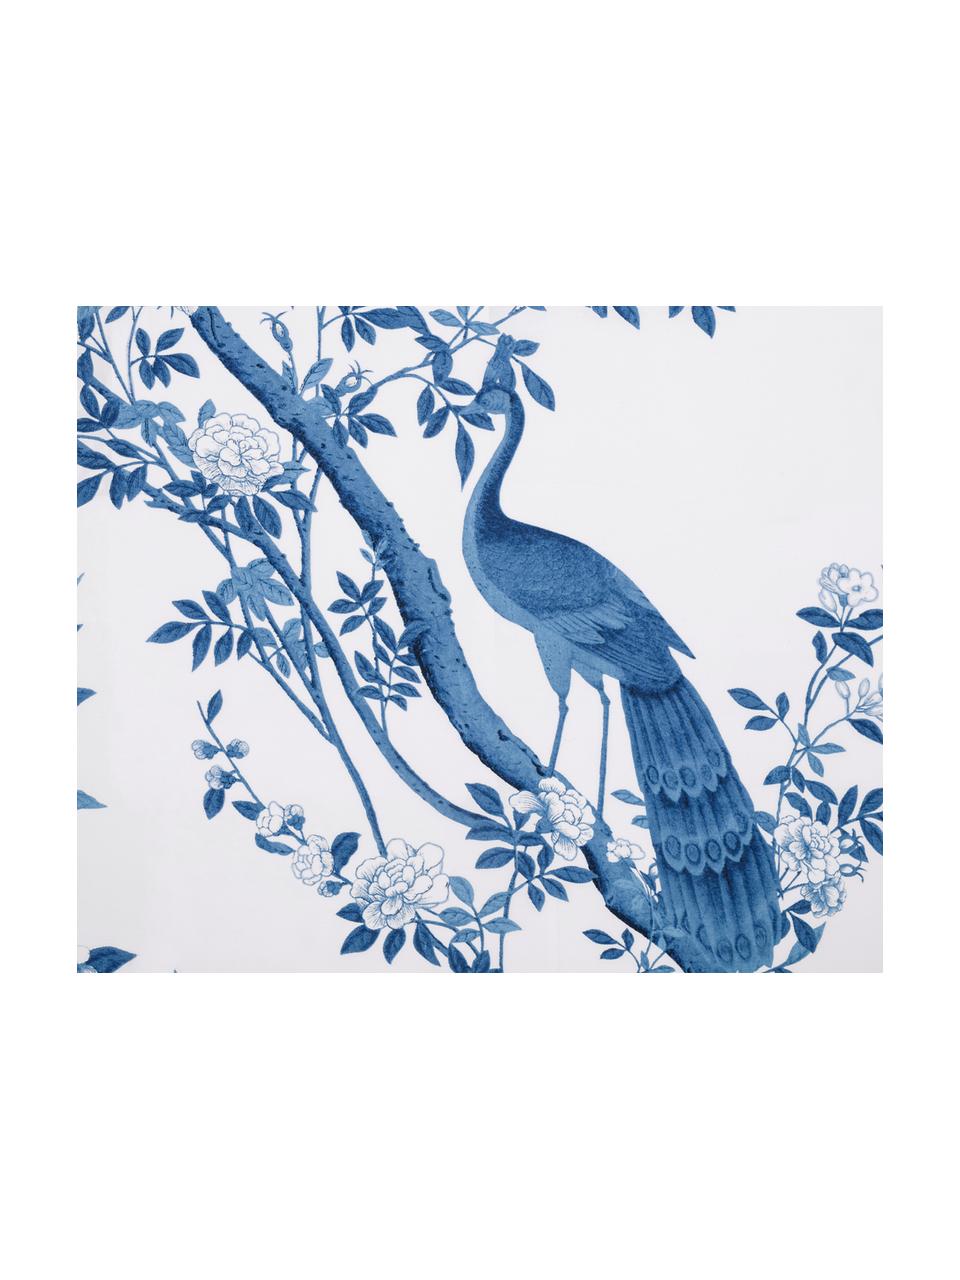 Parure copripiumino in percalle Annabelle, Blu, bianco, 155 x 200 cm + 1 federa 50 x 80 cm